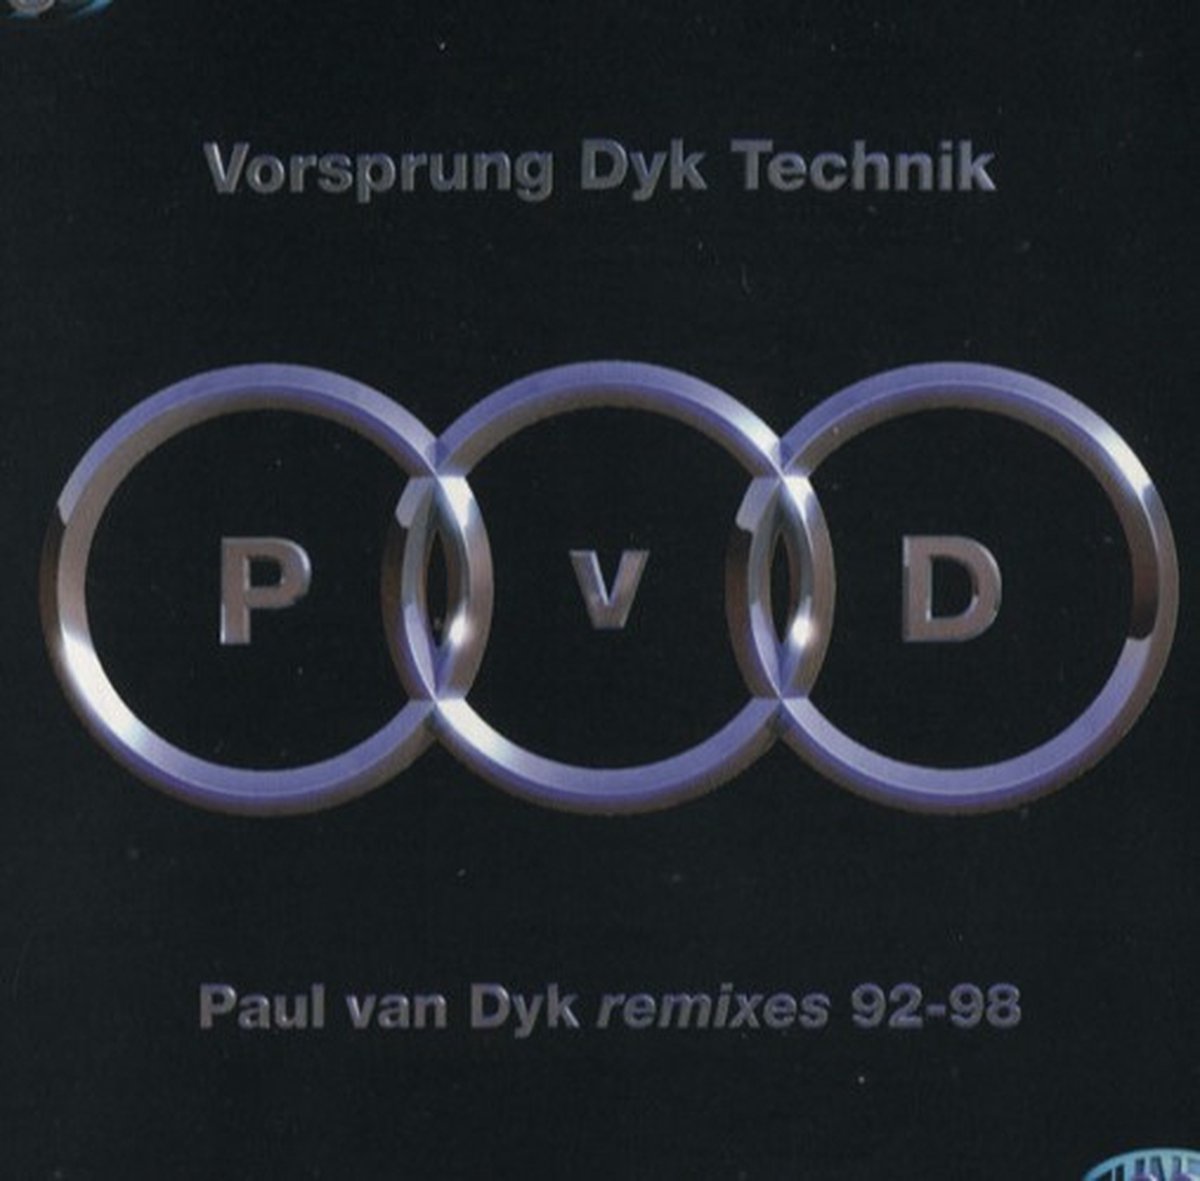 Vorsprung DYK Technik - Paul van Dyk